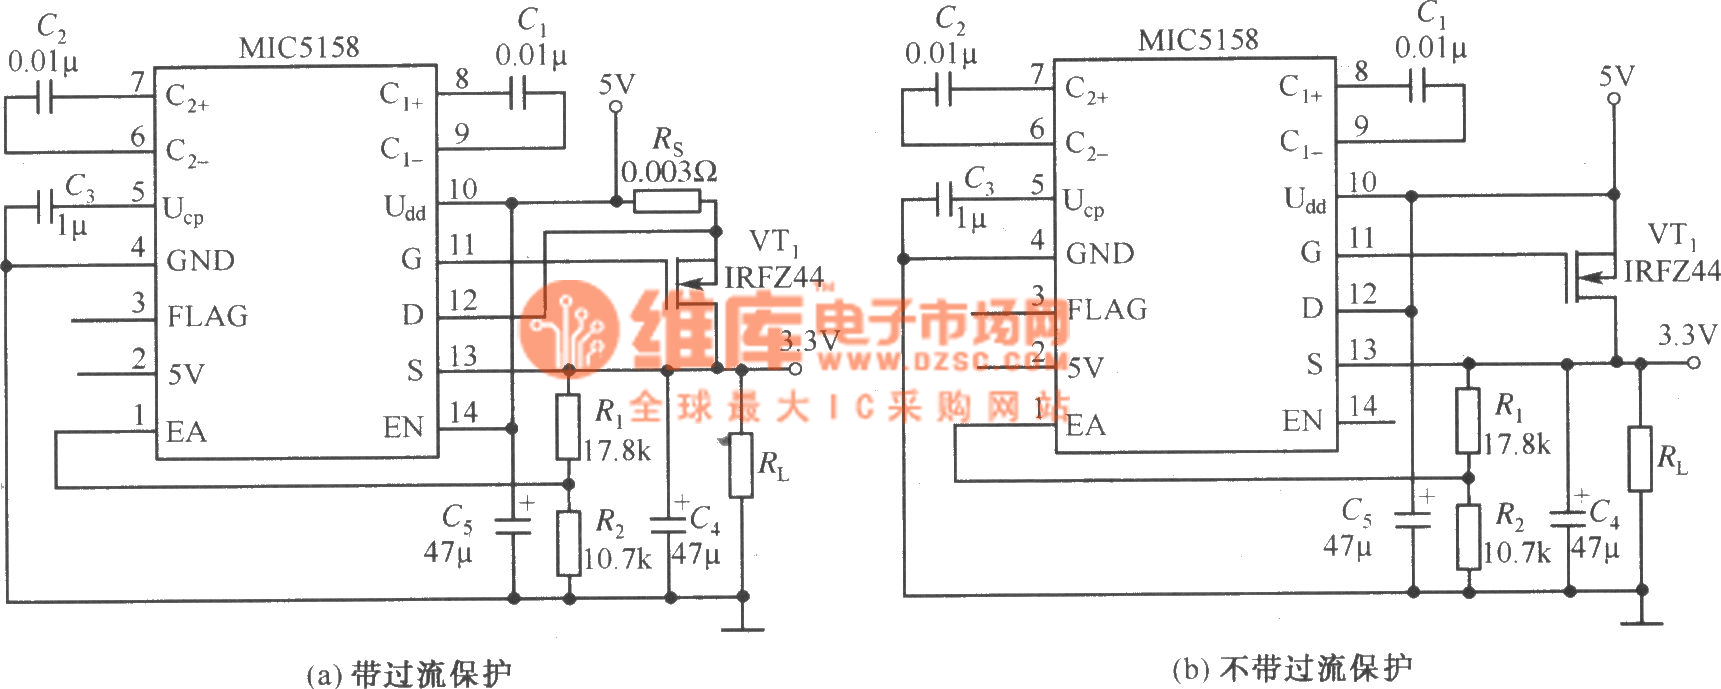 MIC5158构成的外围电路简单的5V输入、3.3V／10A输出的线性稳压器电路 2007